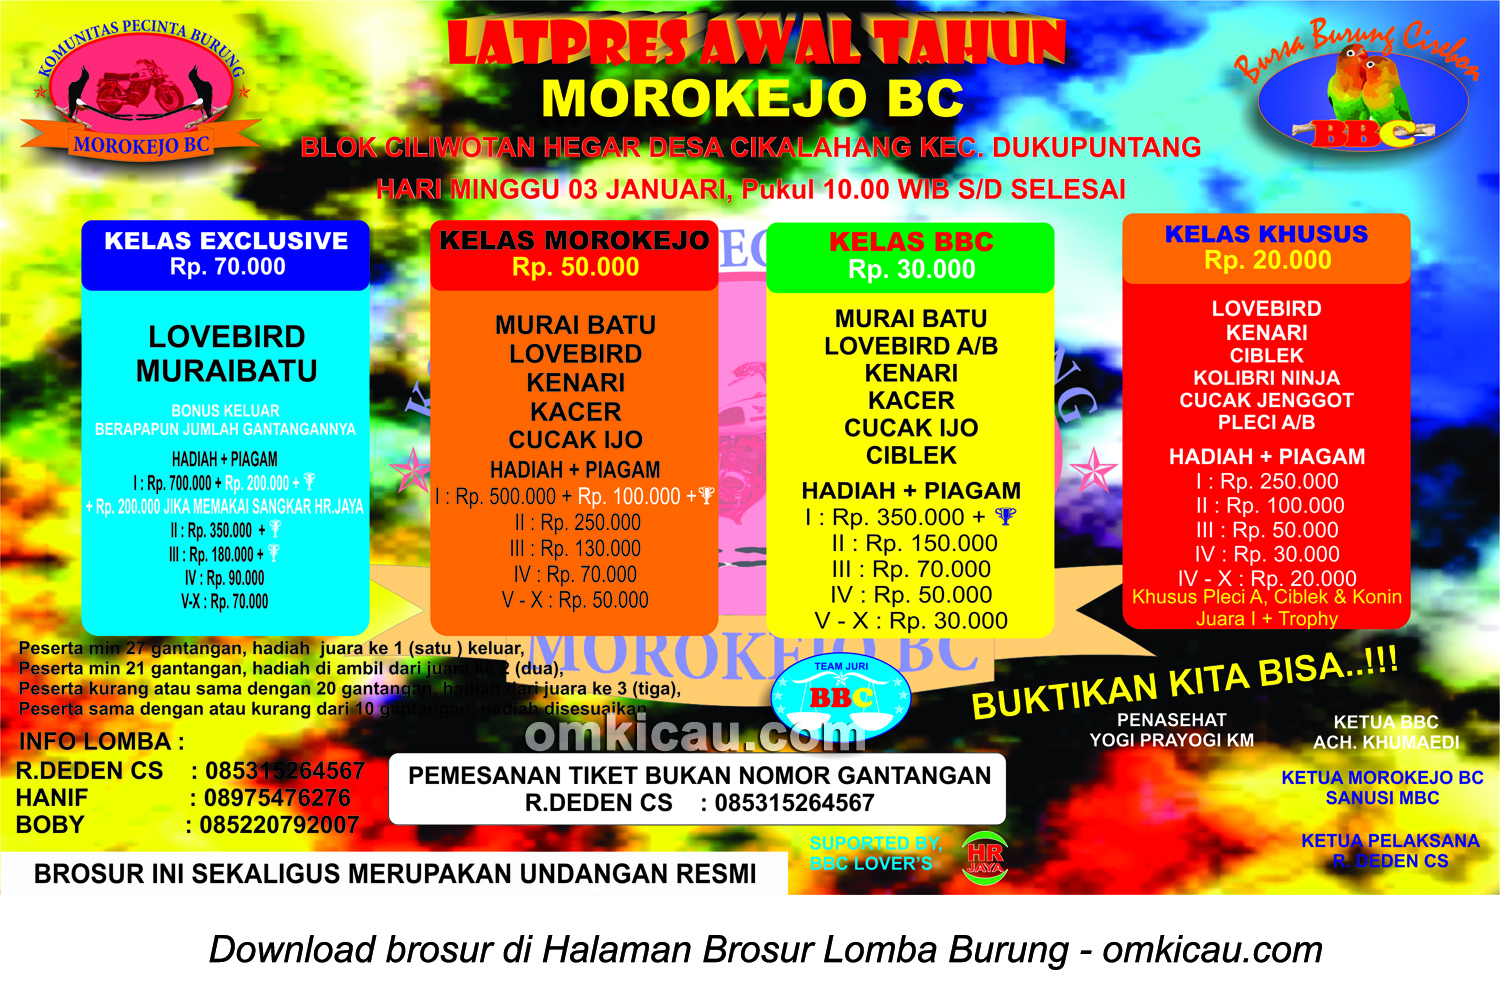 Brosur Latpres Awal Tahun Morokejo BC, Cirebon, 3 Januari 2016